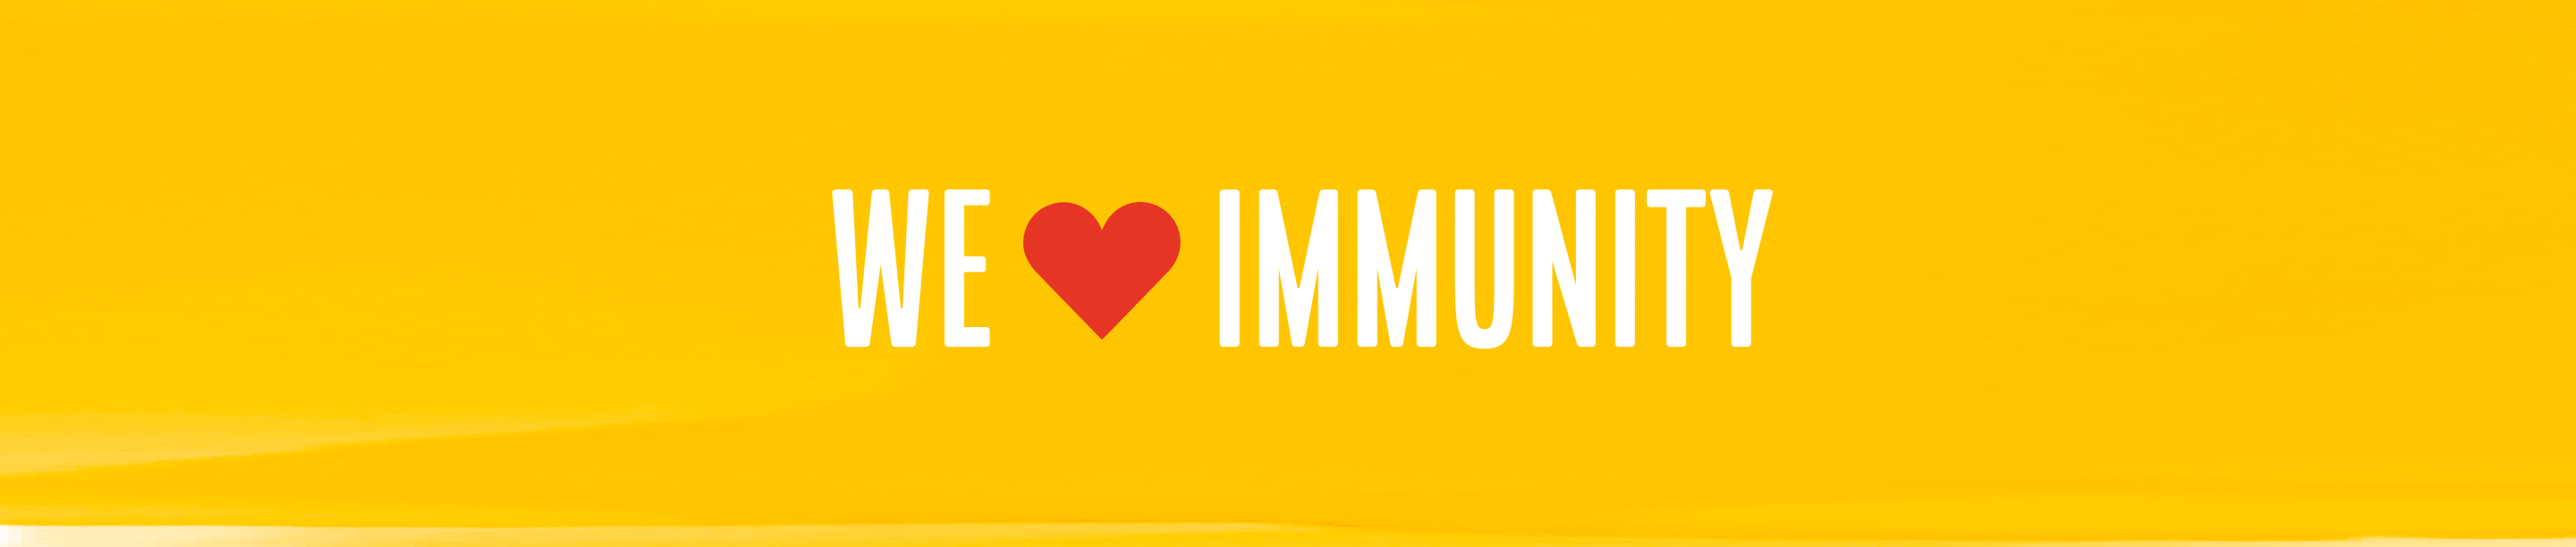 we HEART immunity